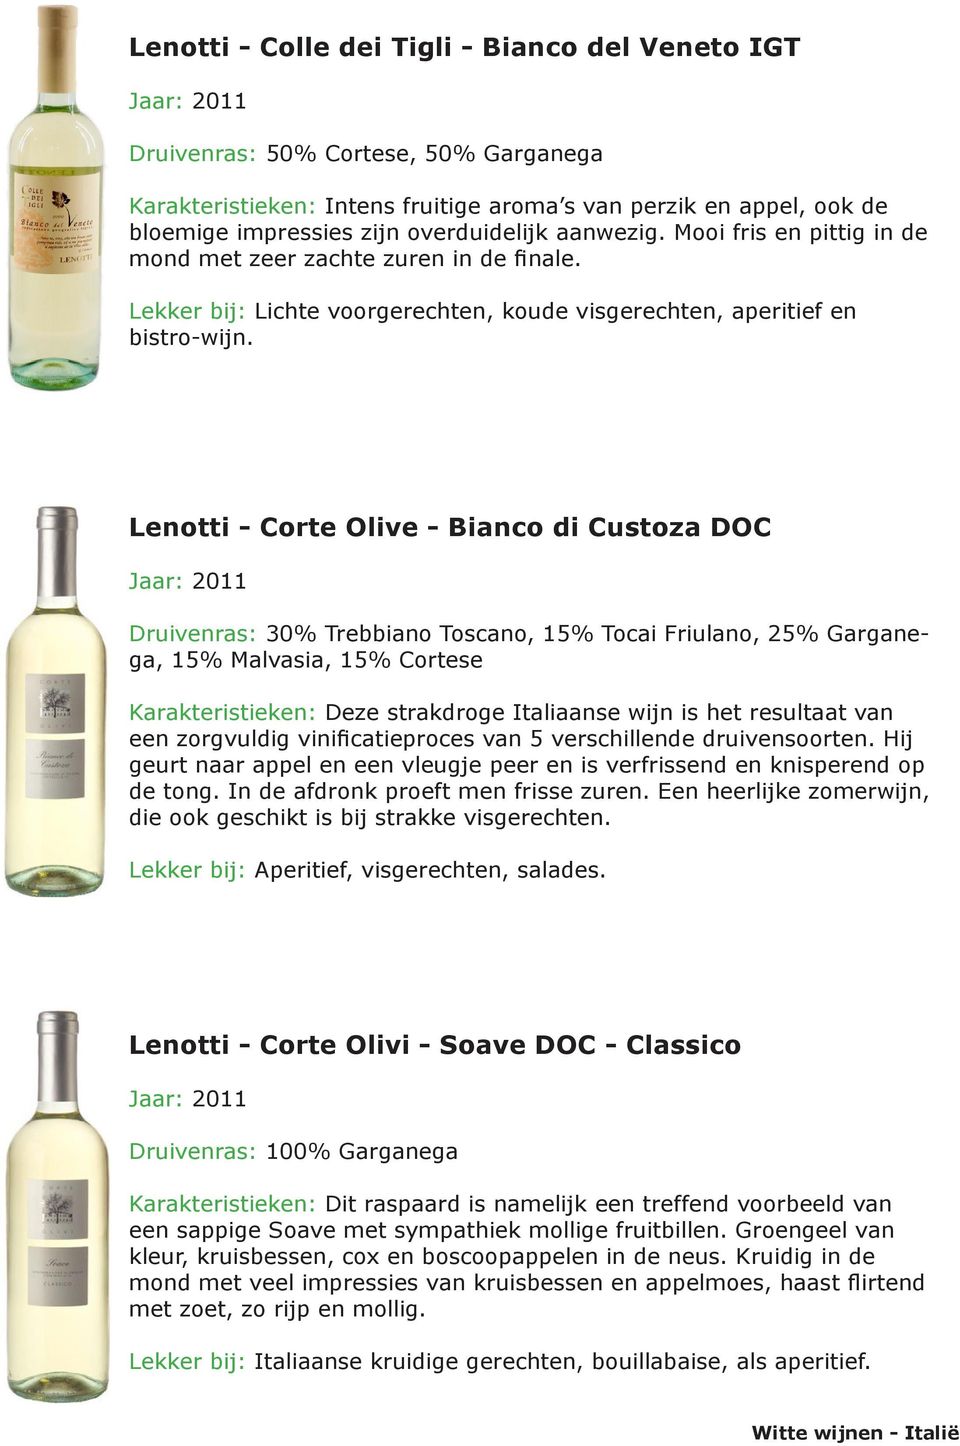 Lenotti - Corte Olive - Bianco di Custoza DOC Druivenras: 30% Trebbiano Toscano, 15% Tocai Friulano, 25% Garganega, 15% Malvasia, 15% Cortese Karakteristieken: Deze strakdroge Italiaanse wijn is het